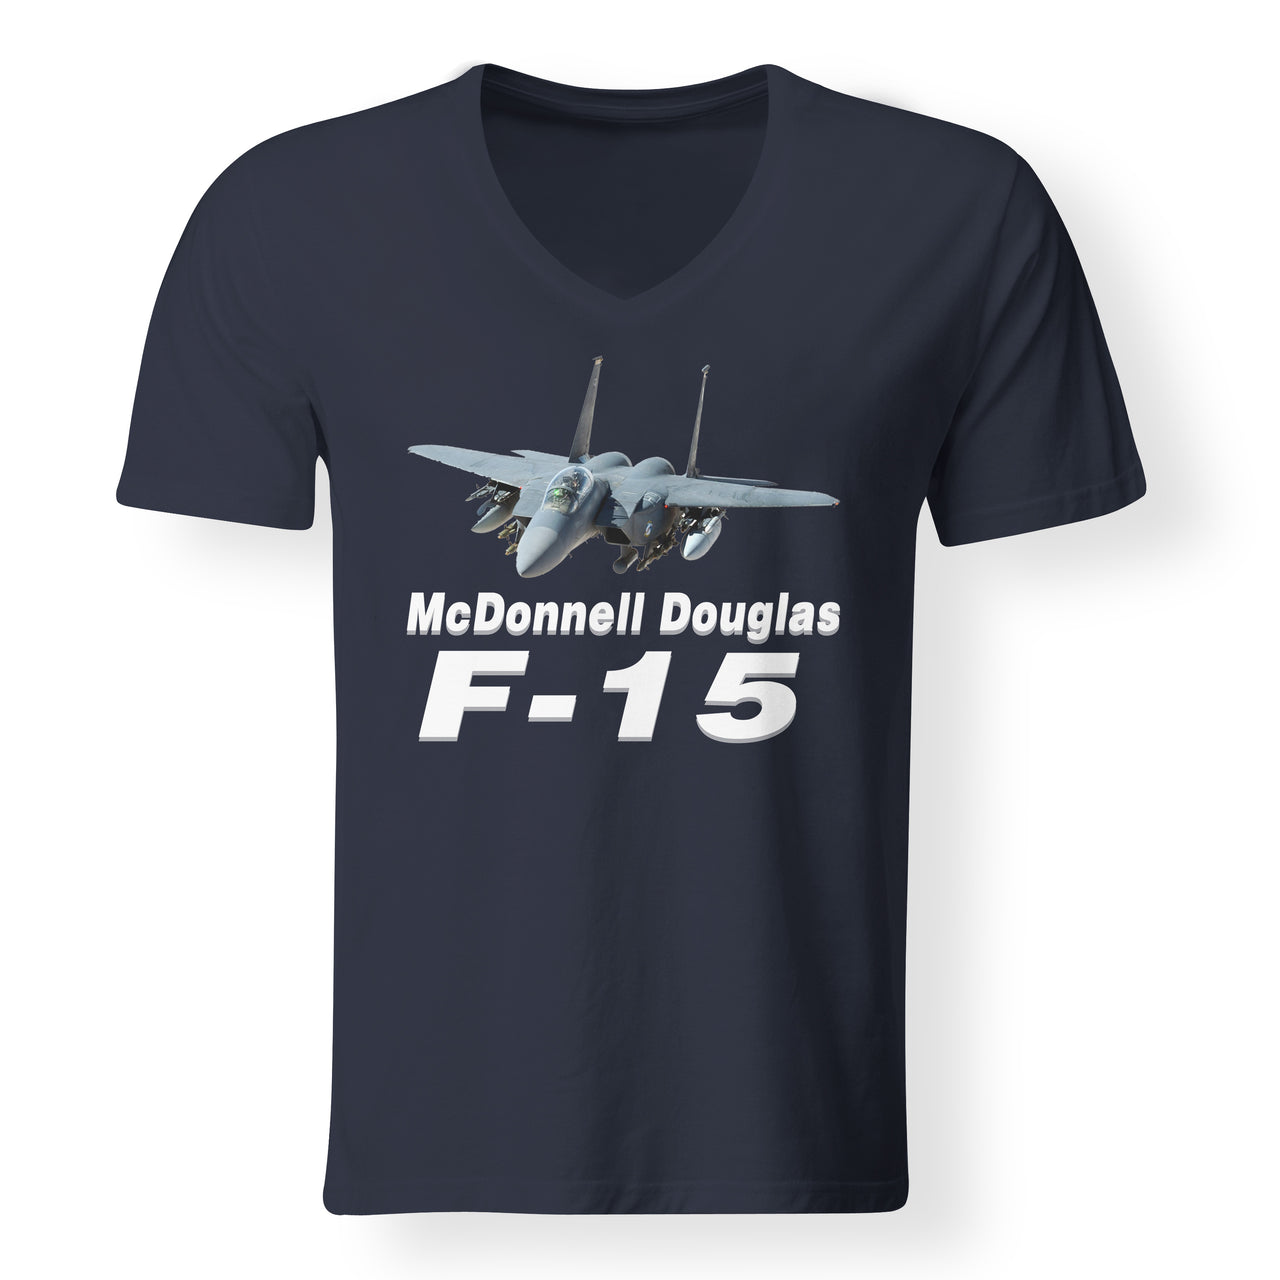 The McDonnell Douglas F15 Designed V-Neck T-Shirts